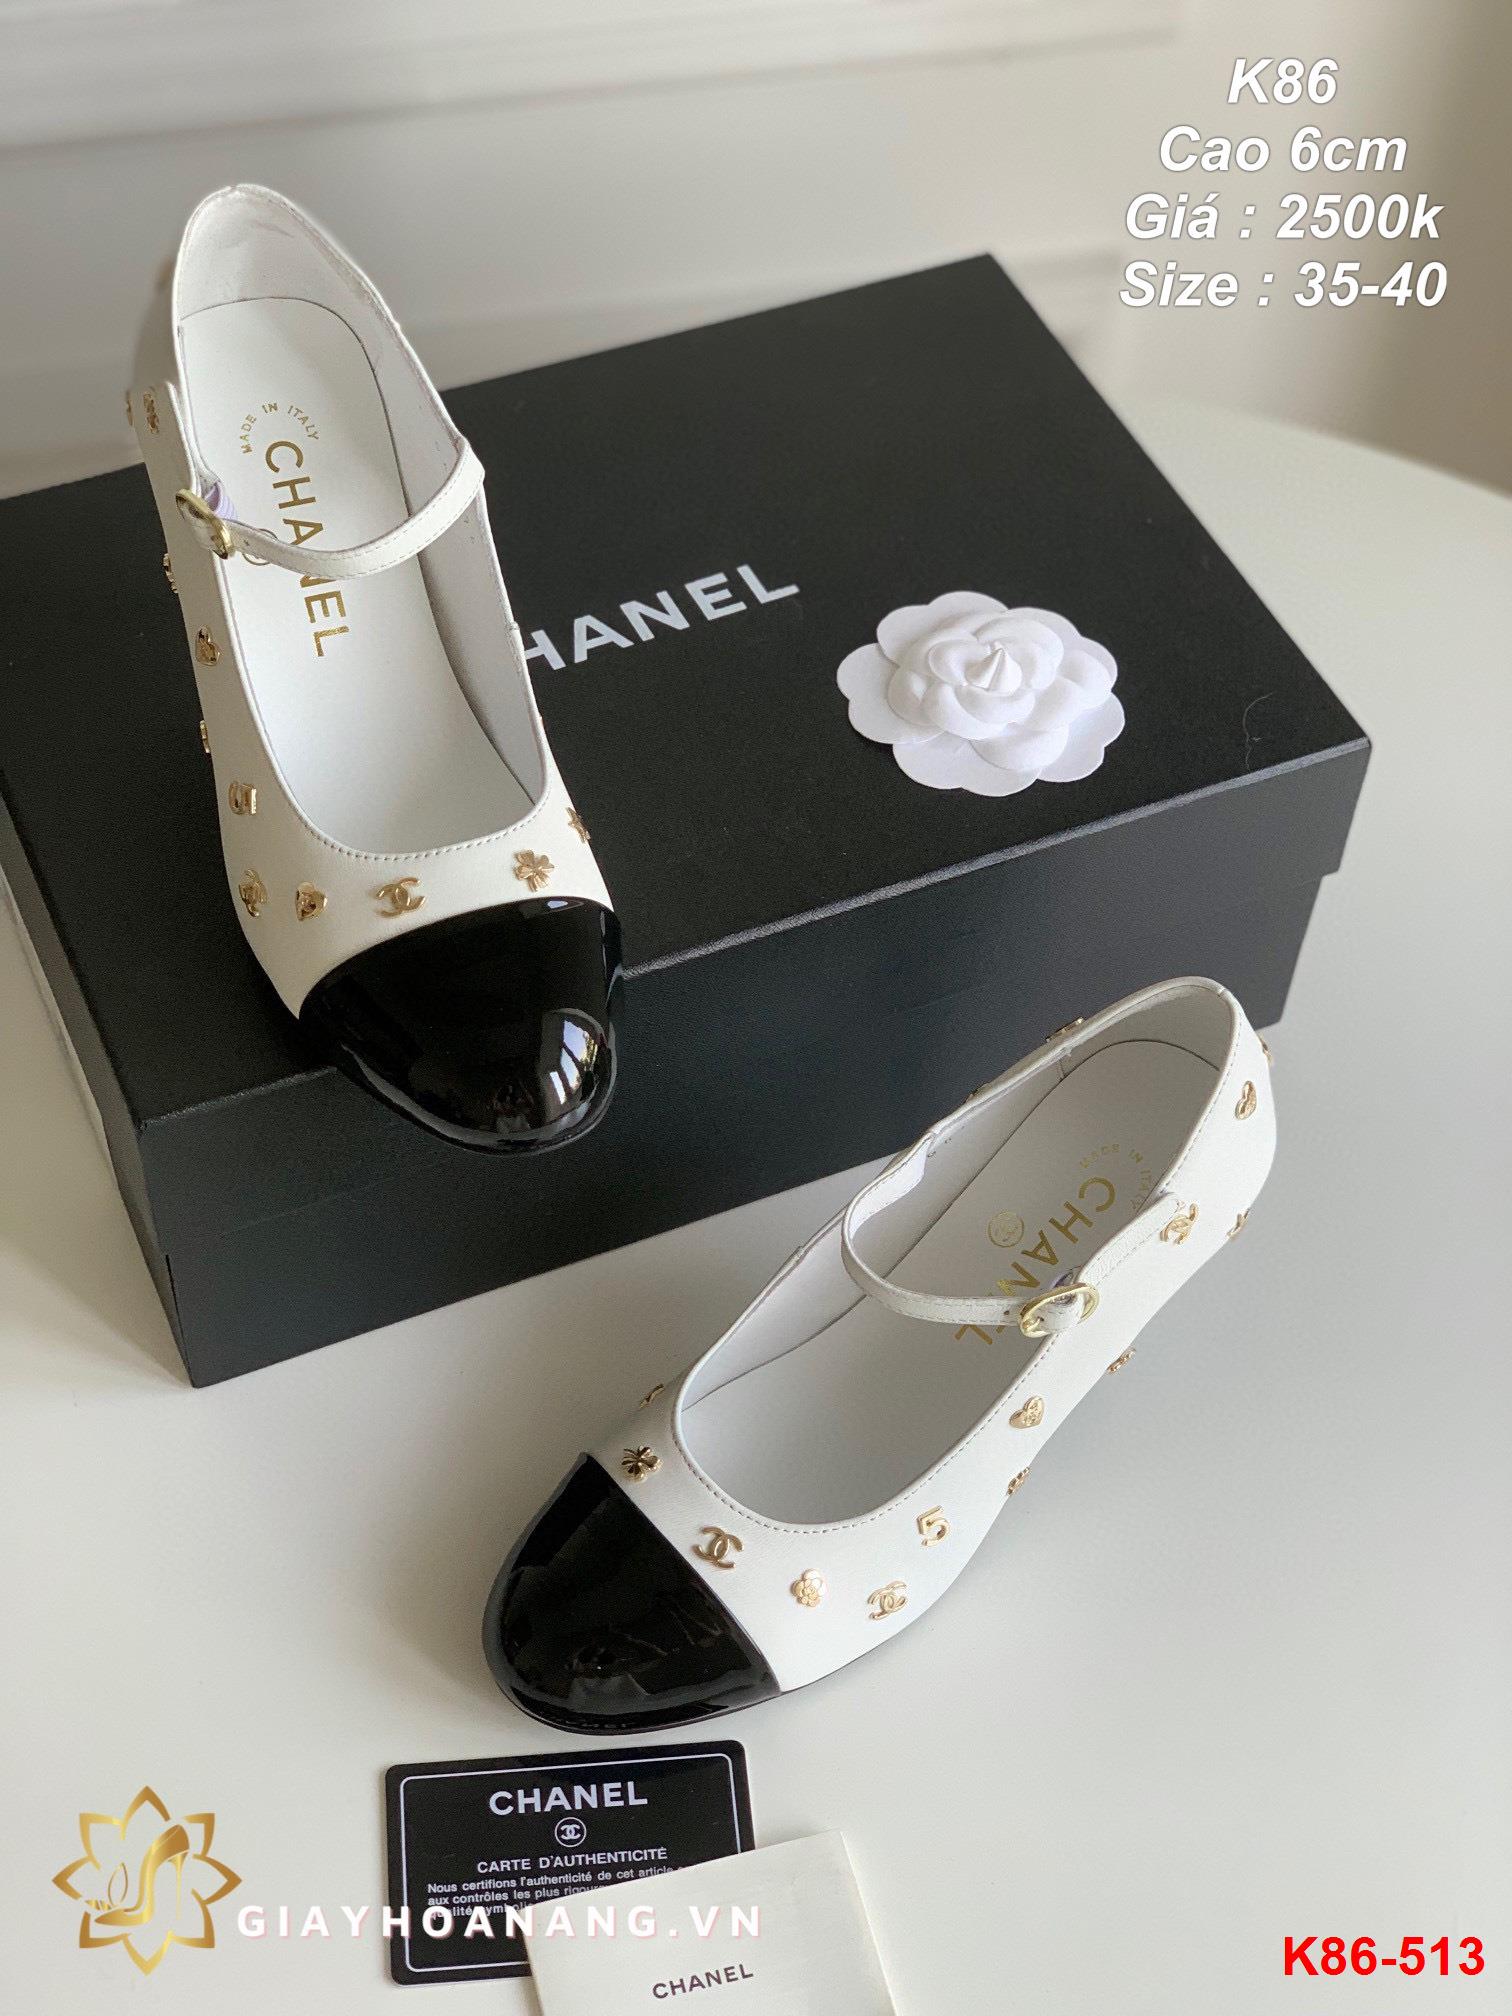 K86-513 Chanel giày cao 6cm siêu cấp